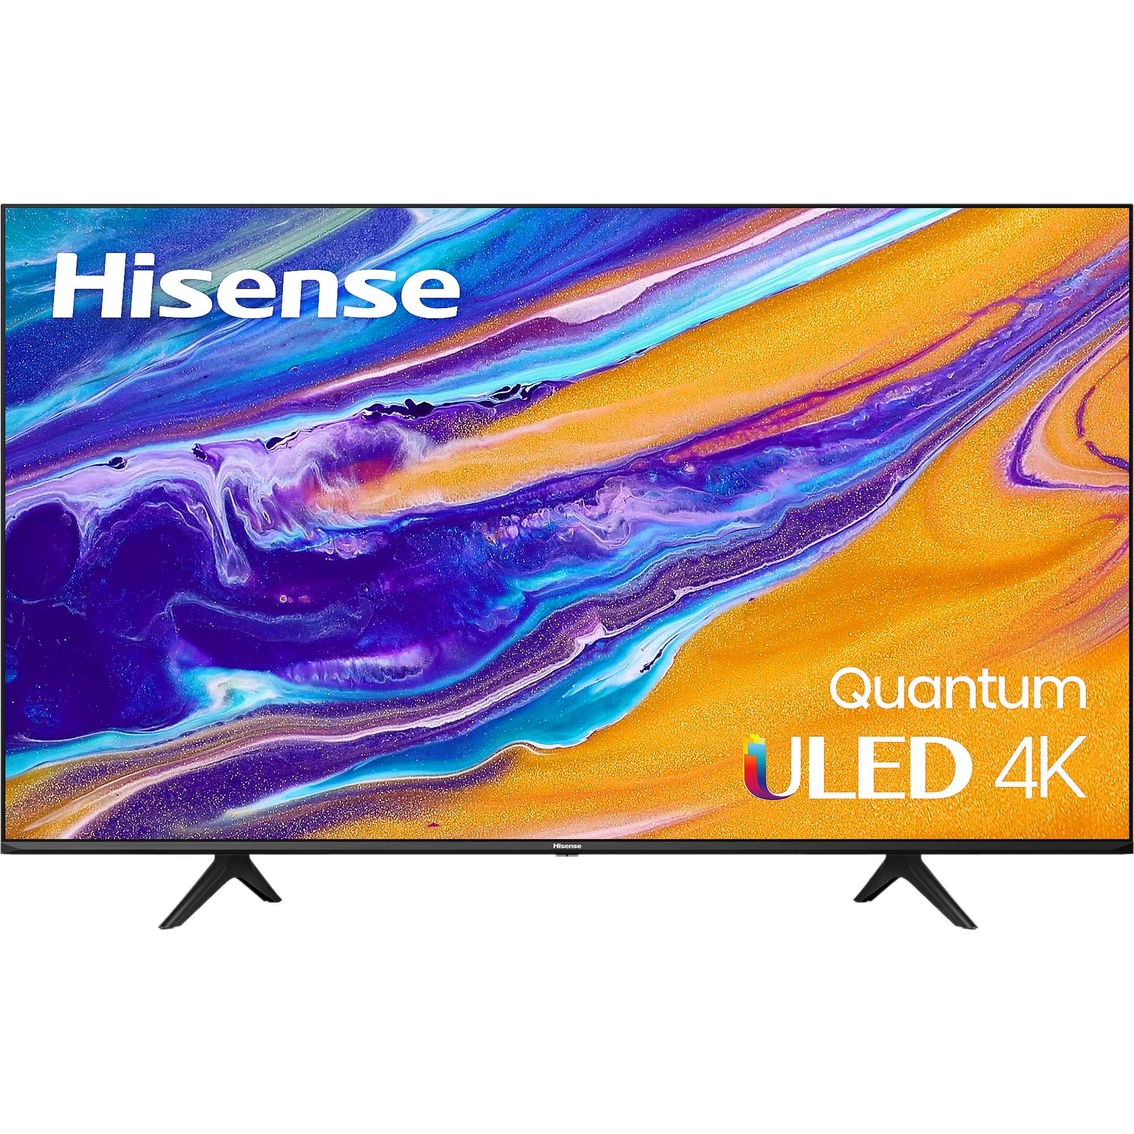 Hisense 75 in. 4K ULED Smart TV with Quantum Dot Technology 75U6G